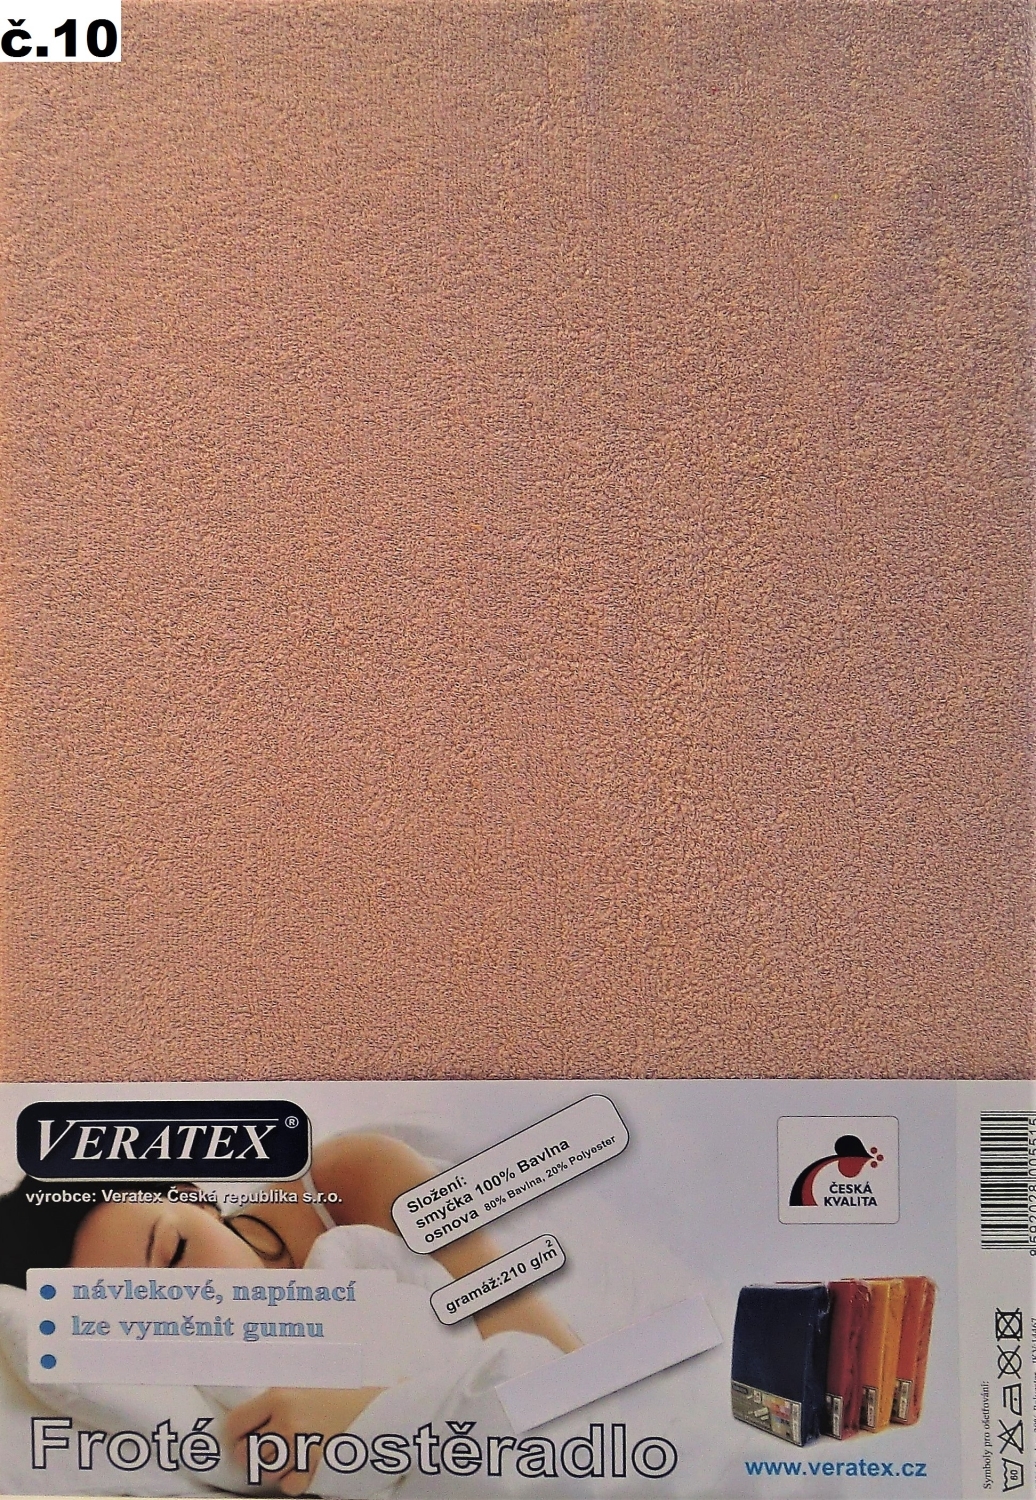 Veratex Froté prostěradlo 100x200/16 cm (č.10-starorůžová) 100 x 200 cm